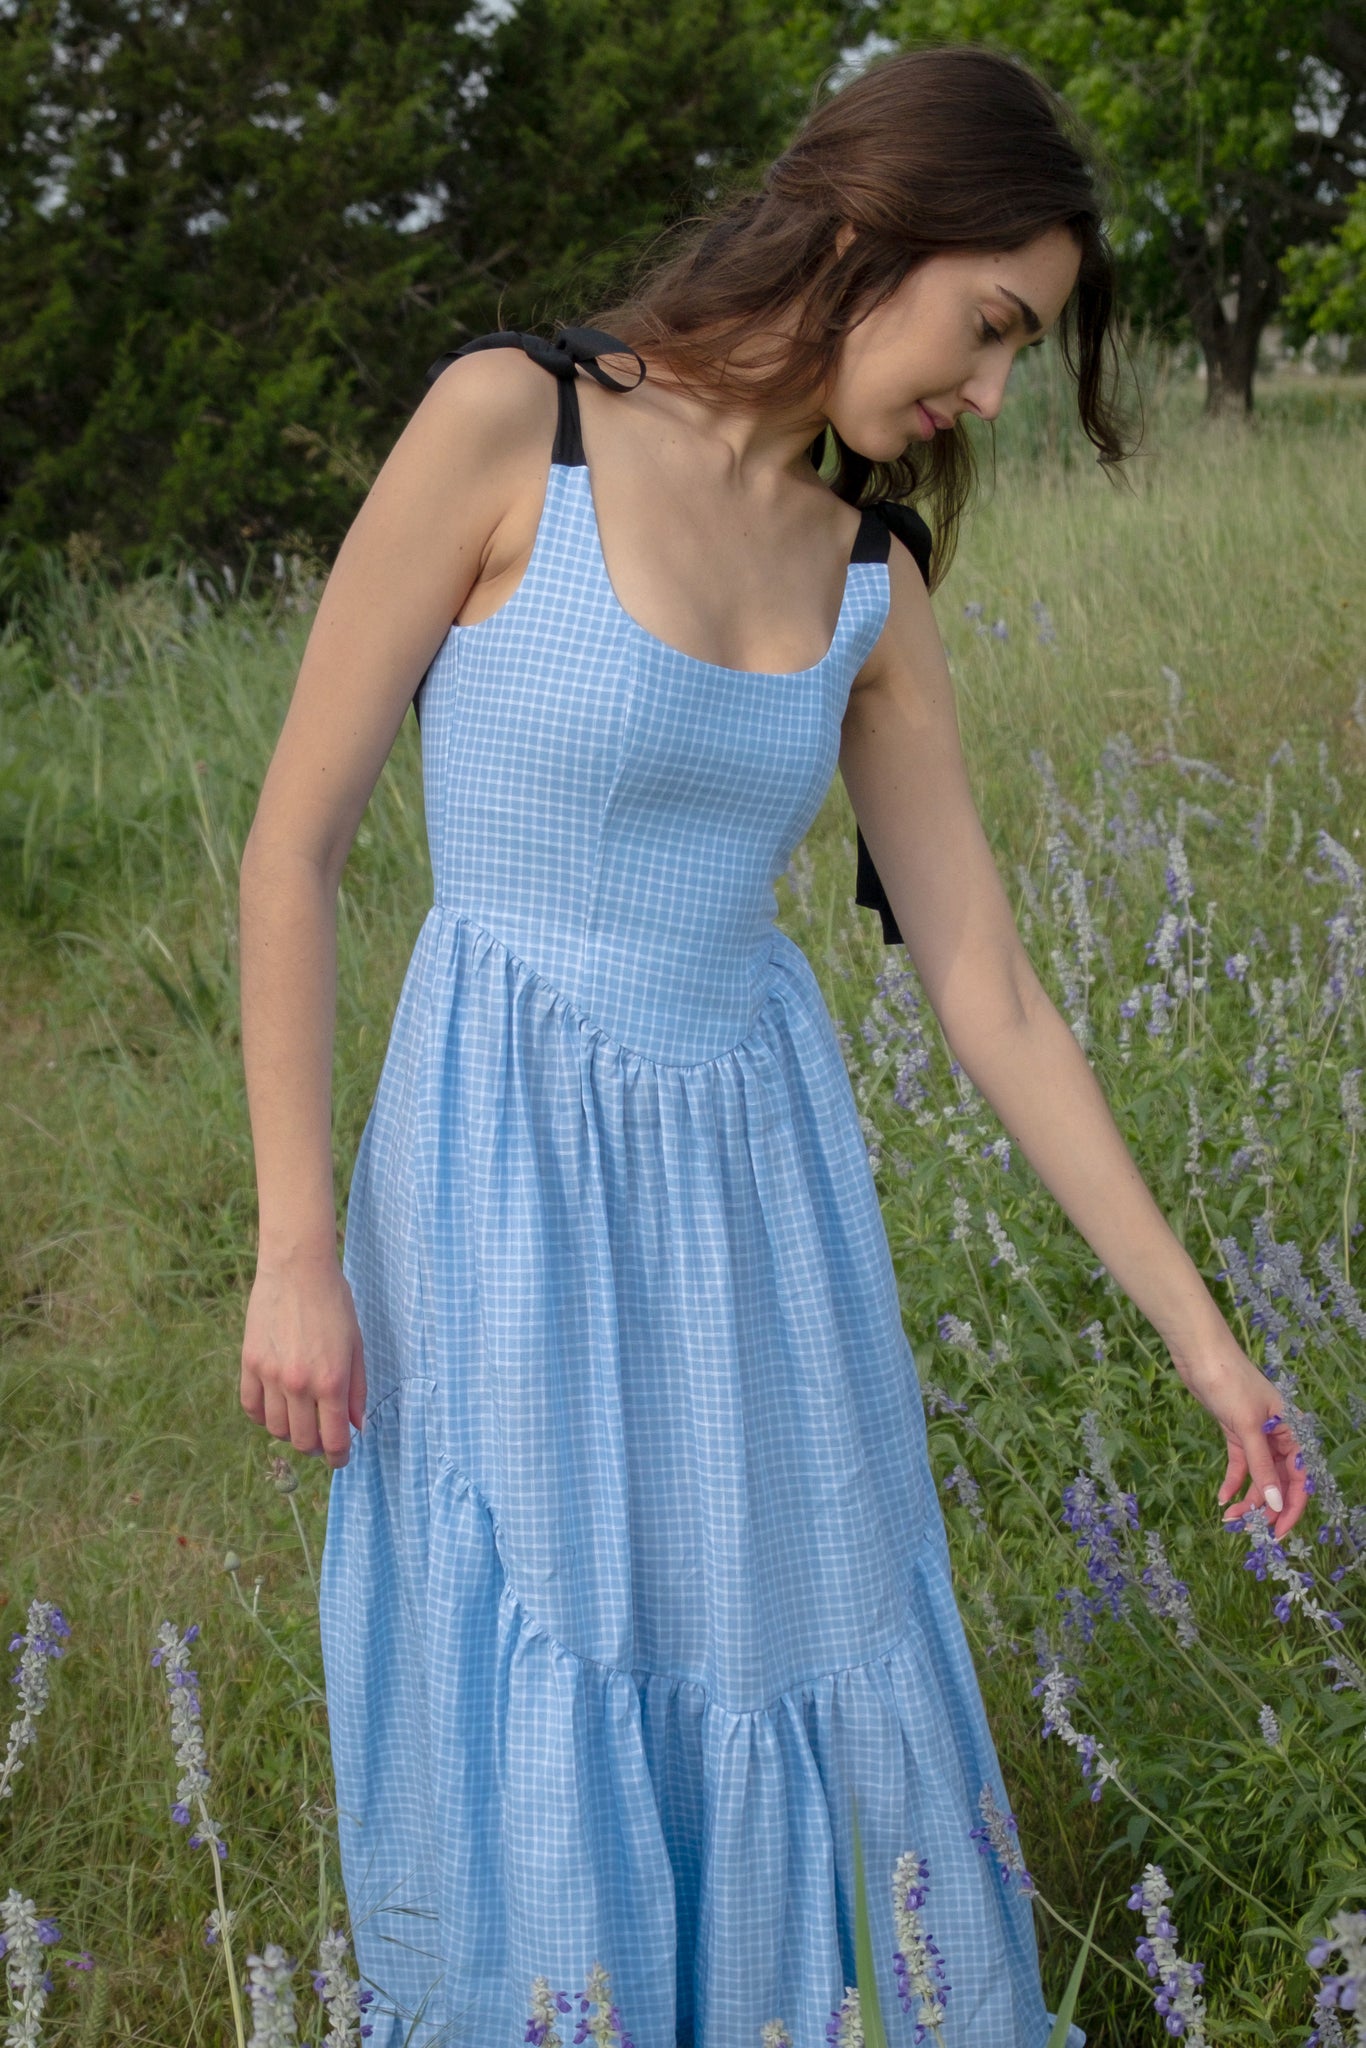 Mirabelle Dress in Blue Gingham